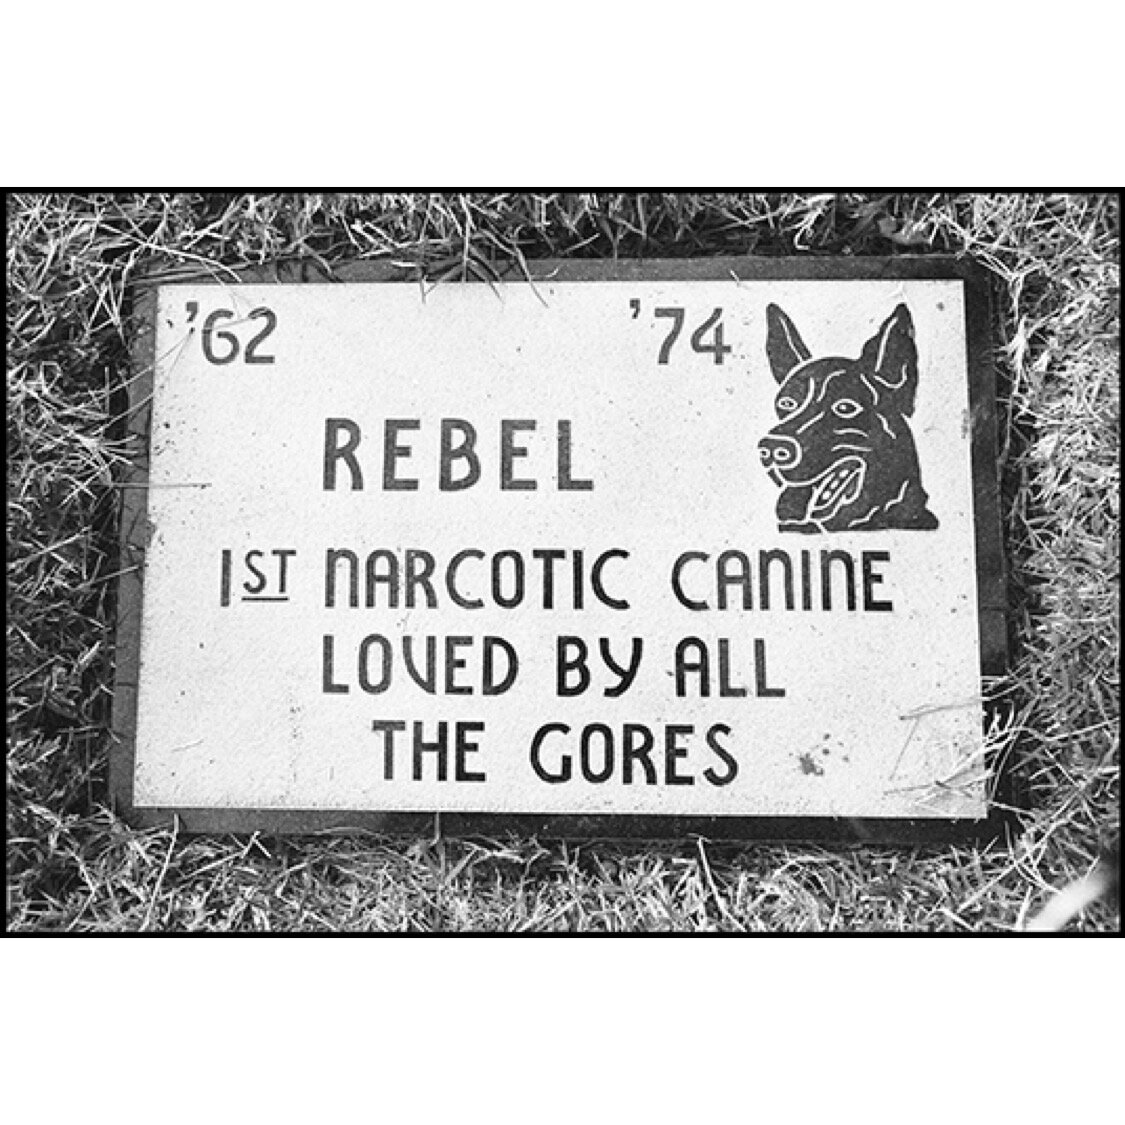 'Rebel 1st Narcotic Dog' © Ave Pildas, 1976, Los Angeles, California